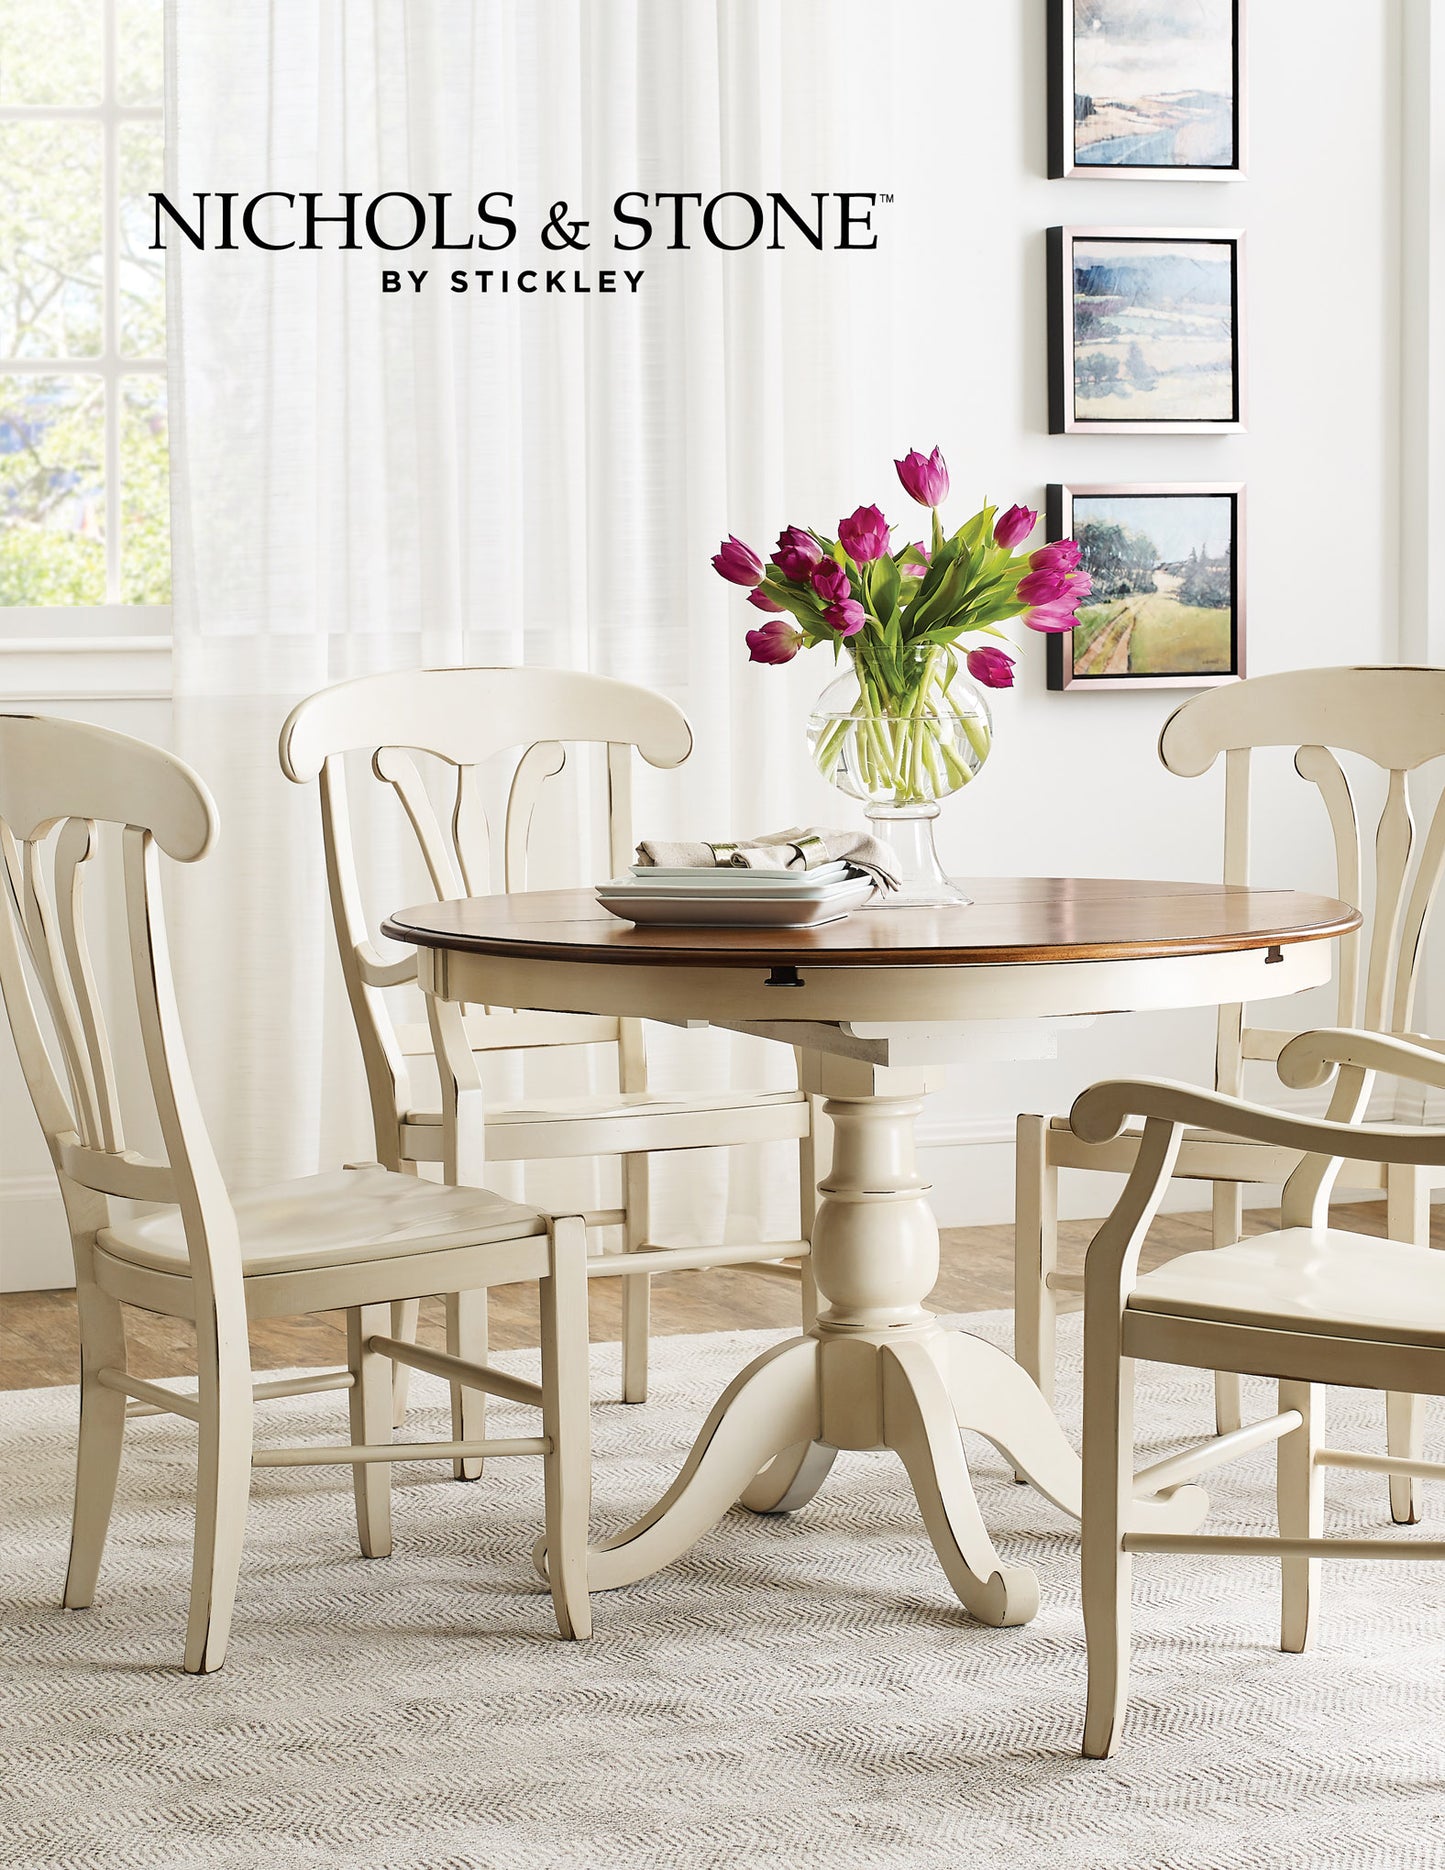 Nichols & Stone Catalog